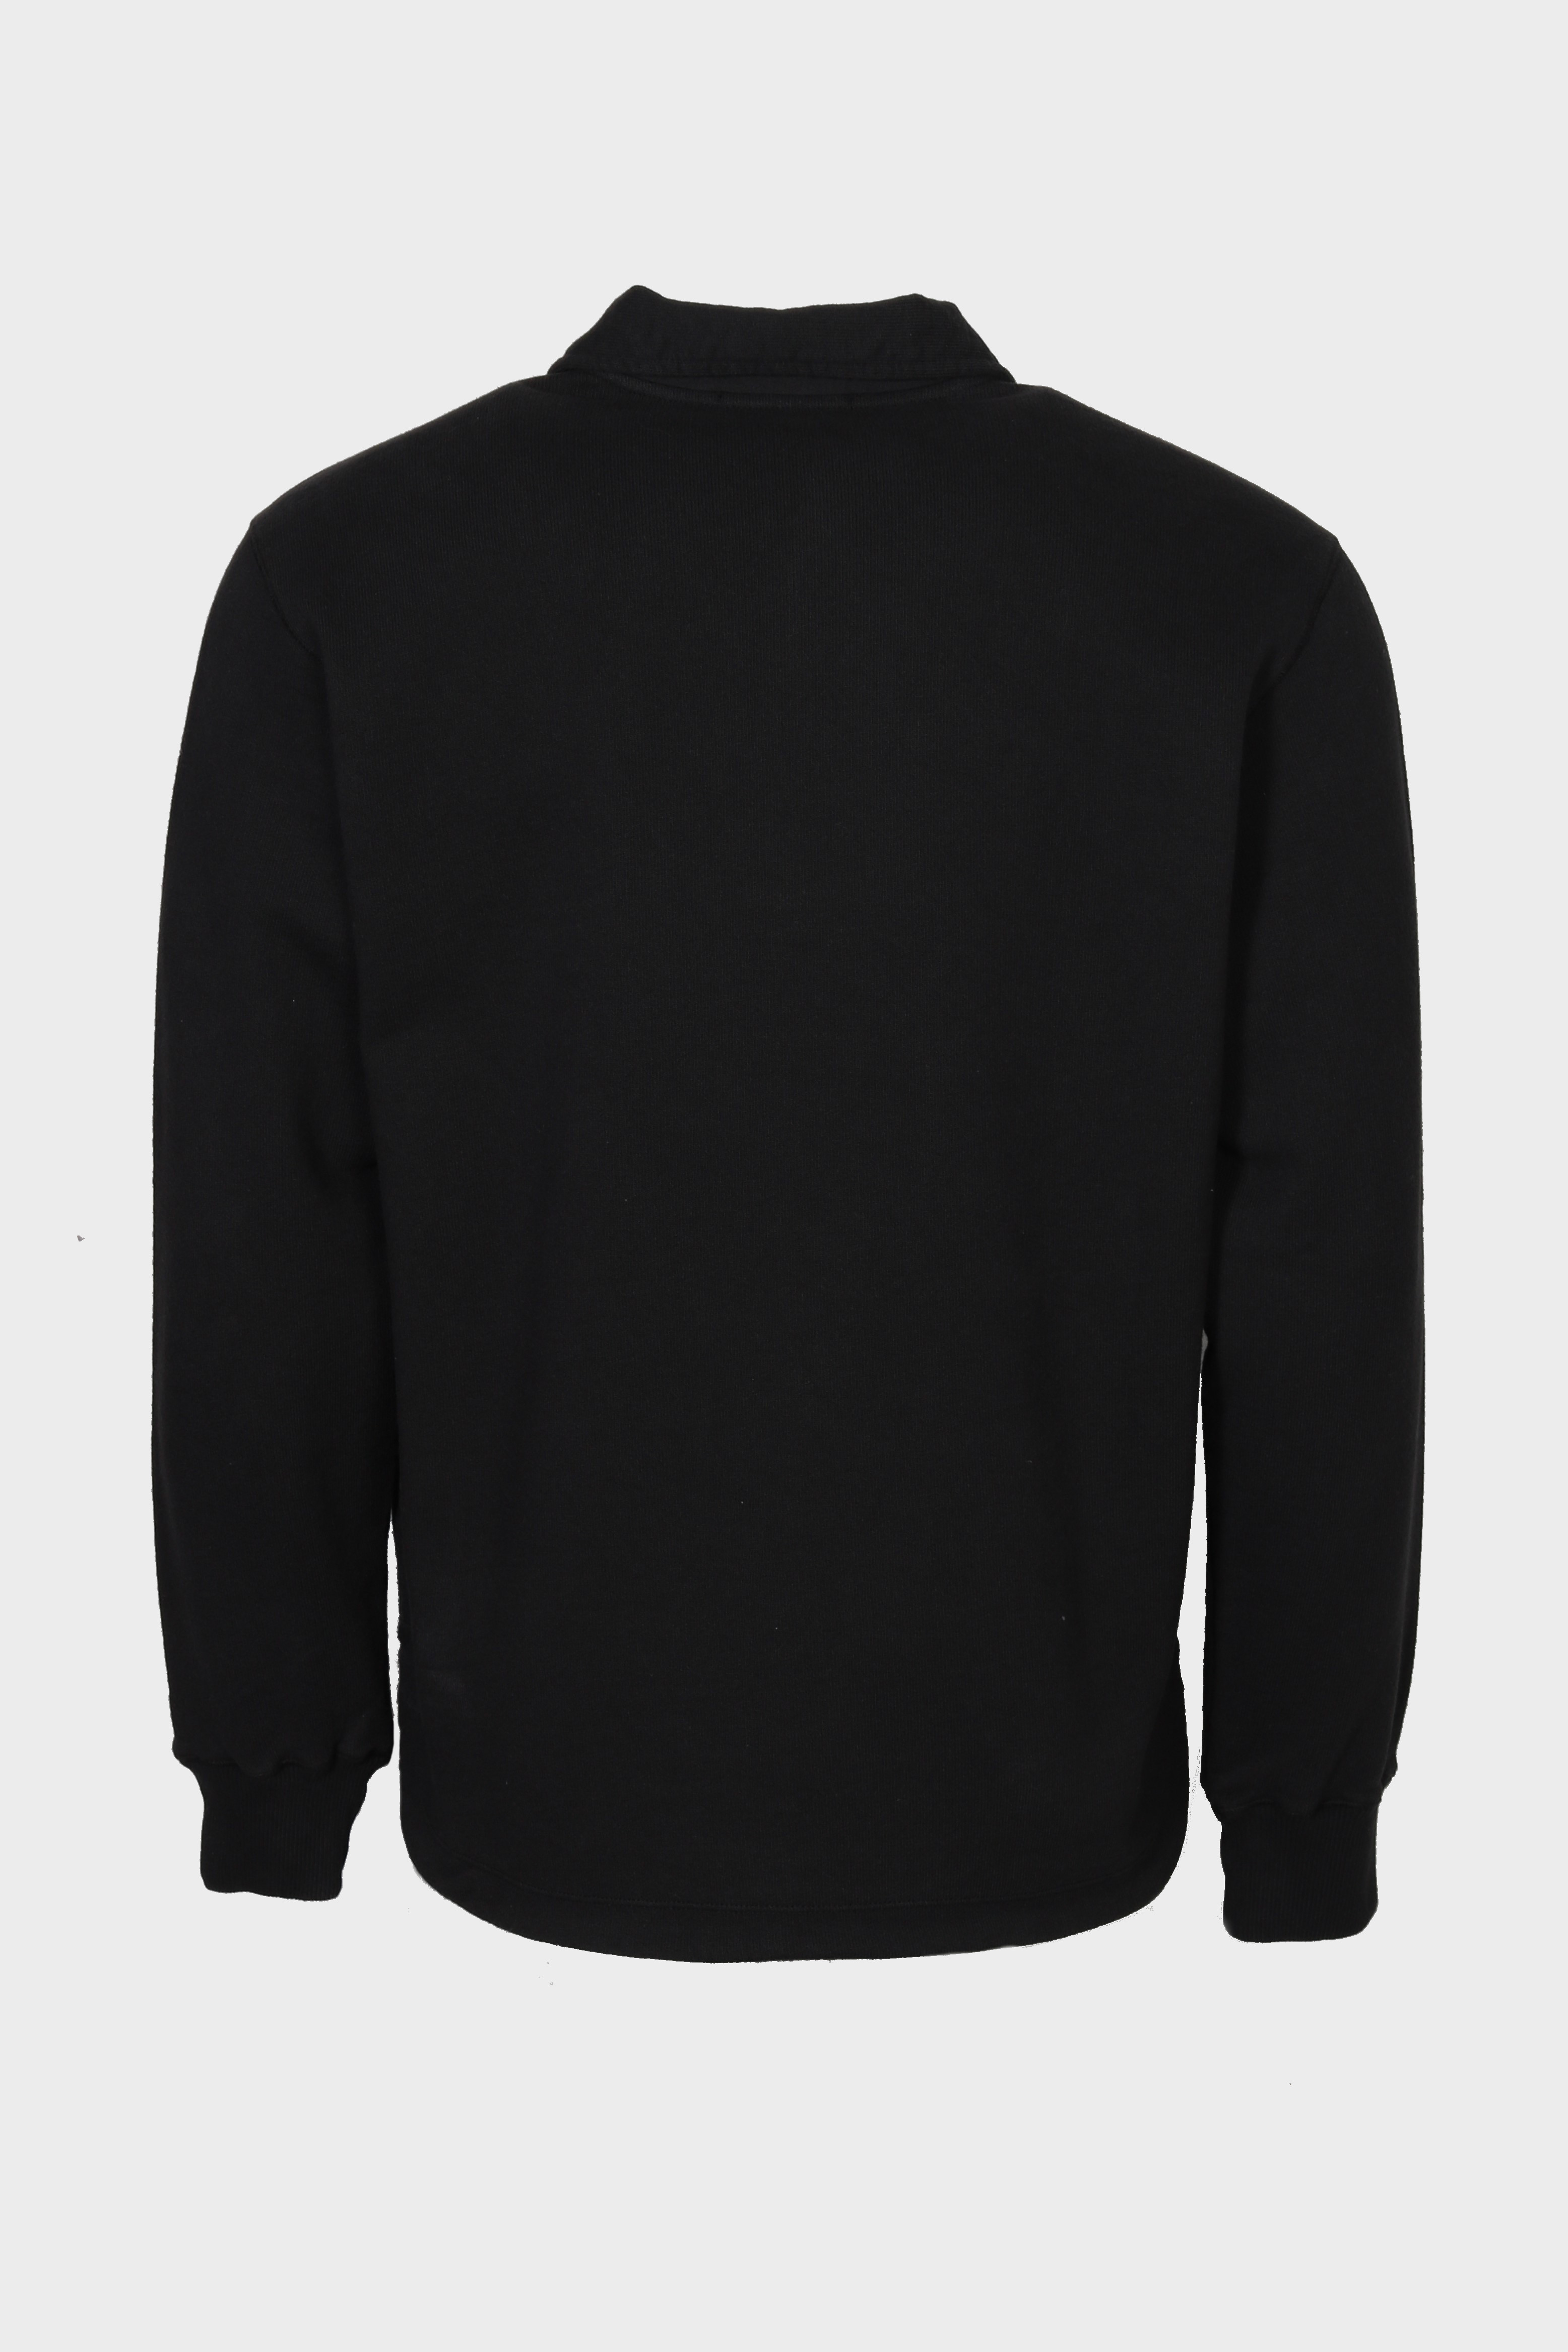 STONE ISLAND Stamp Half Zip Sweatshirt in Black 3XL